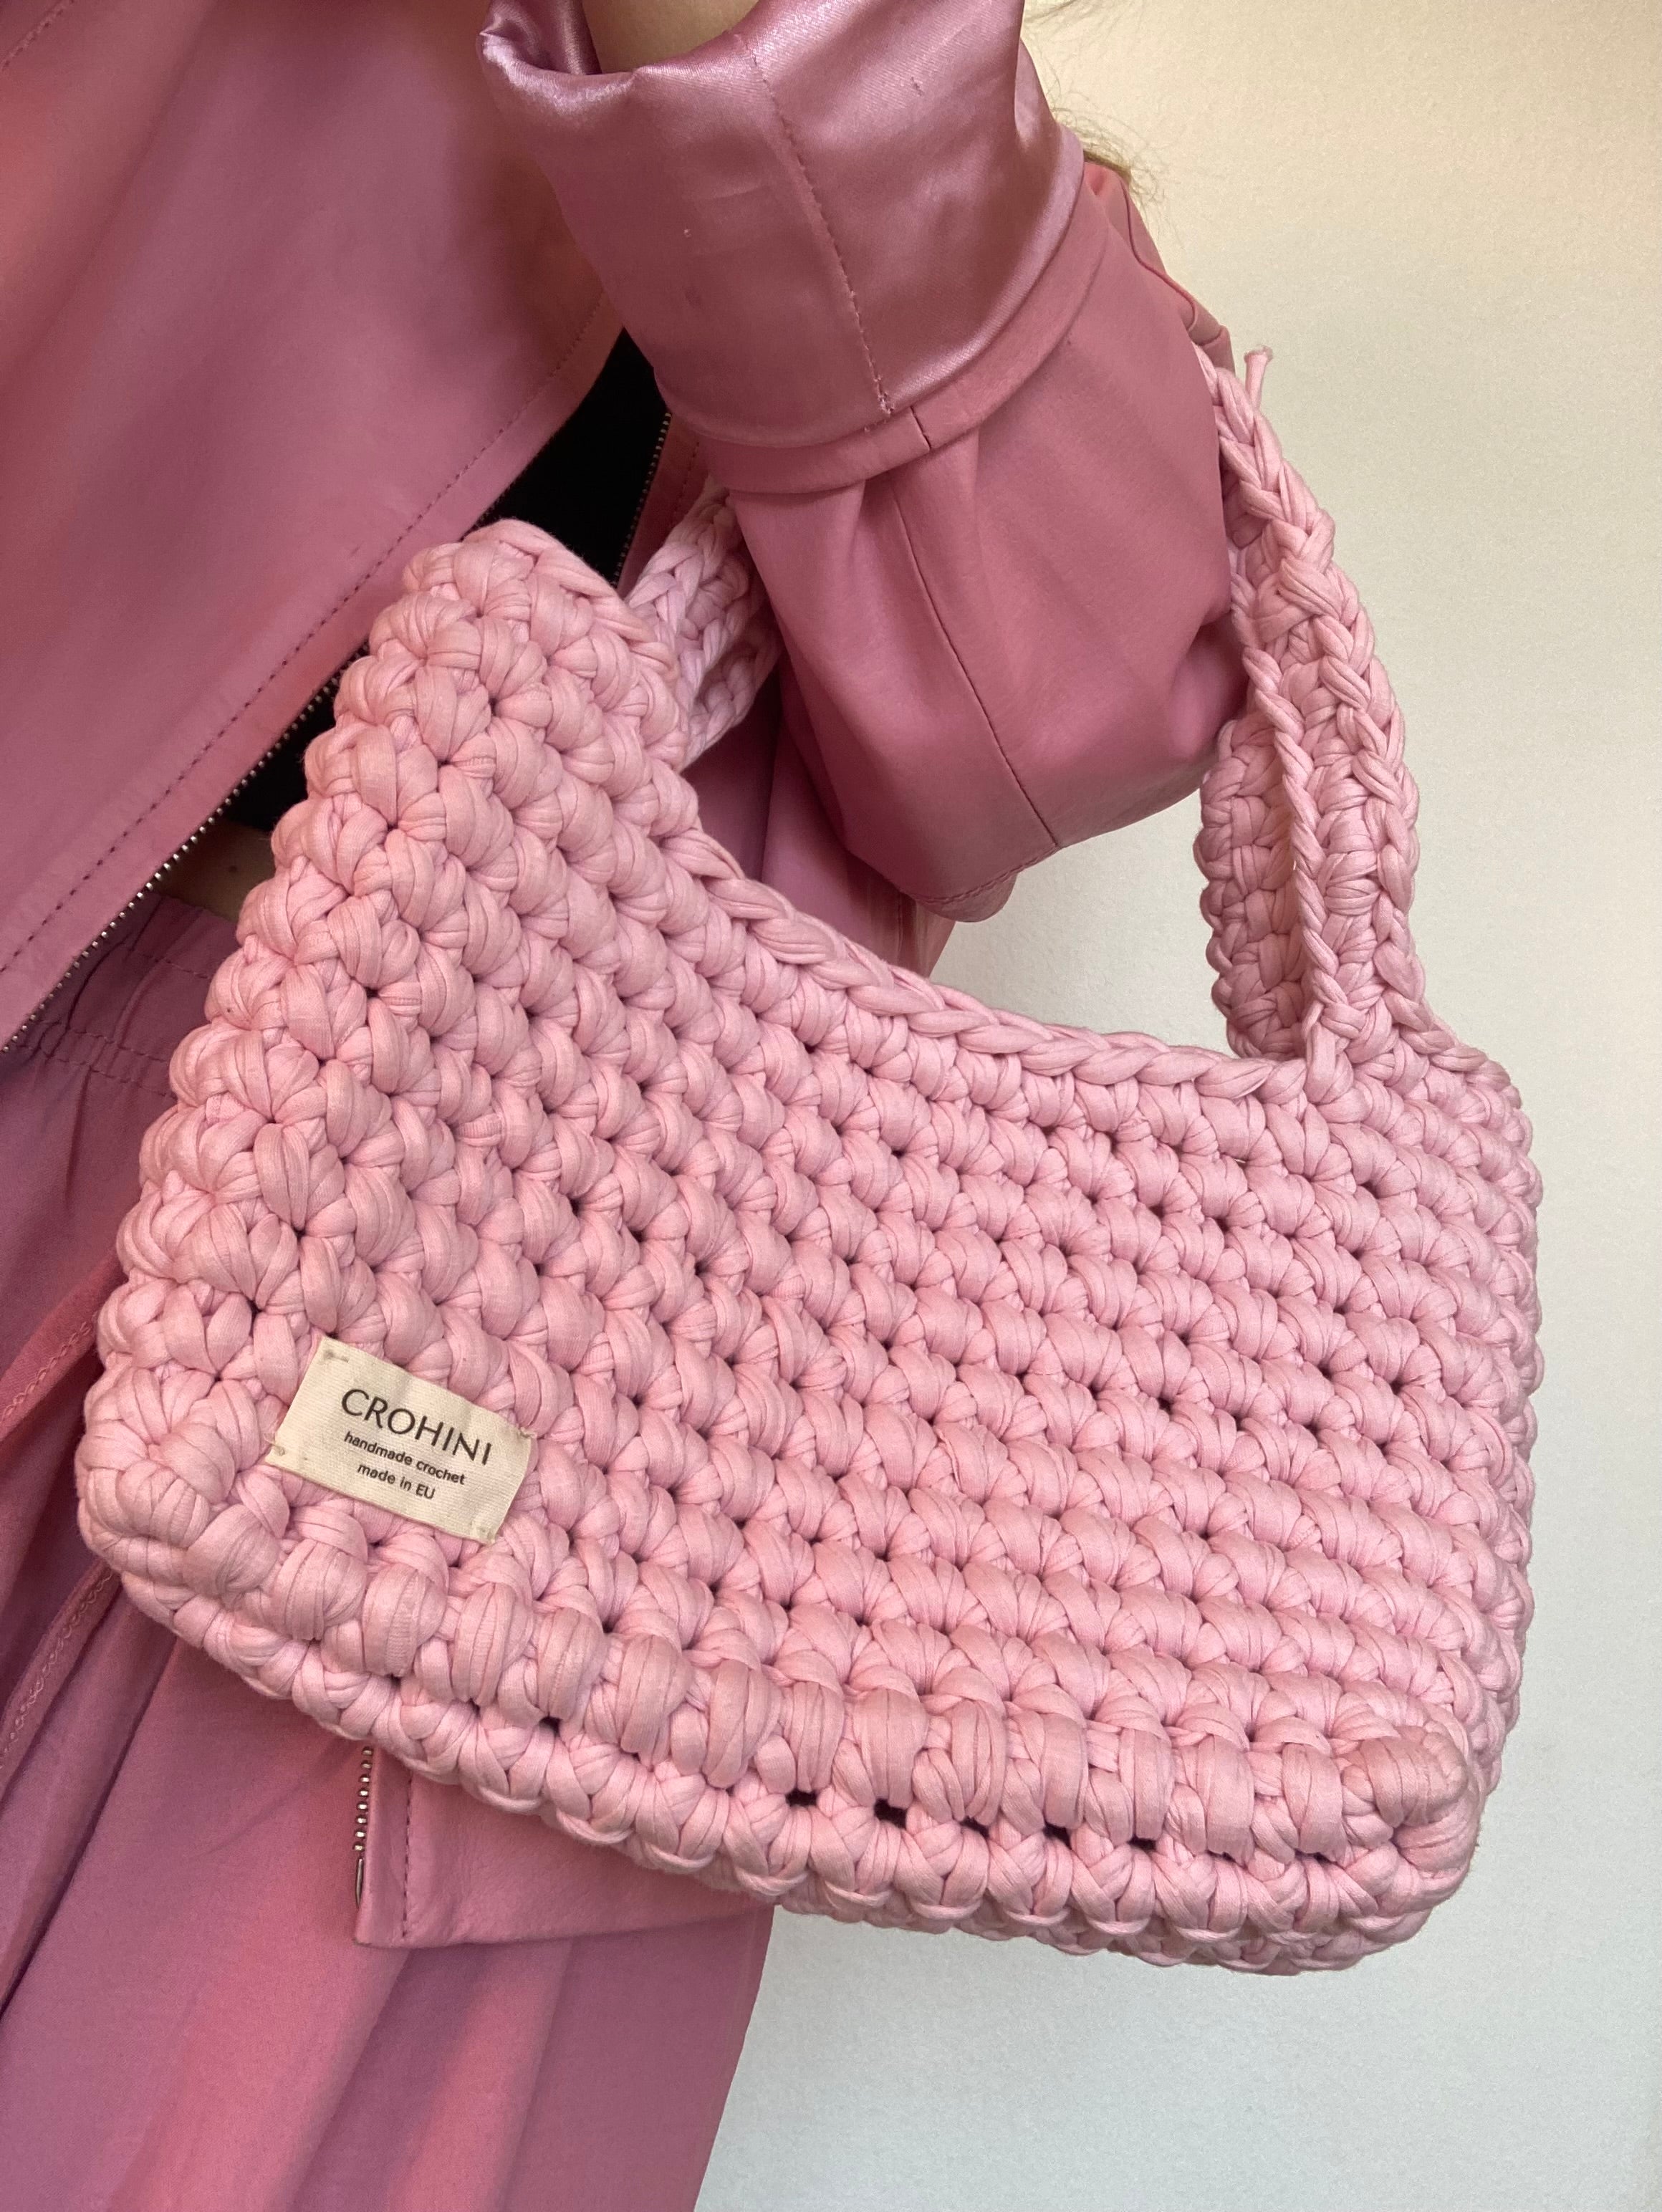 Handbags | Crosia Bag Handmade Crochet Yarn Very Attractive | Freeup